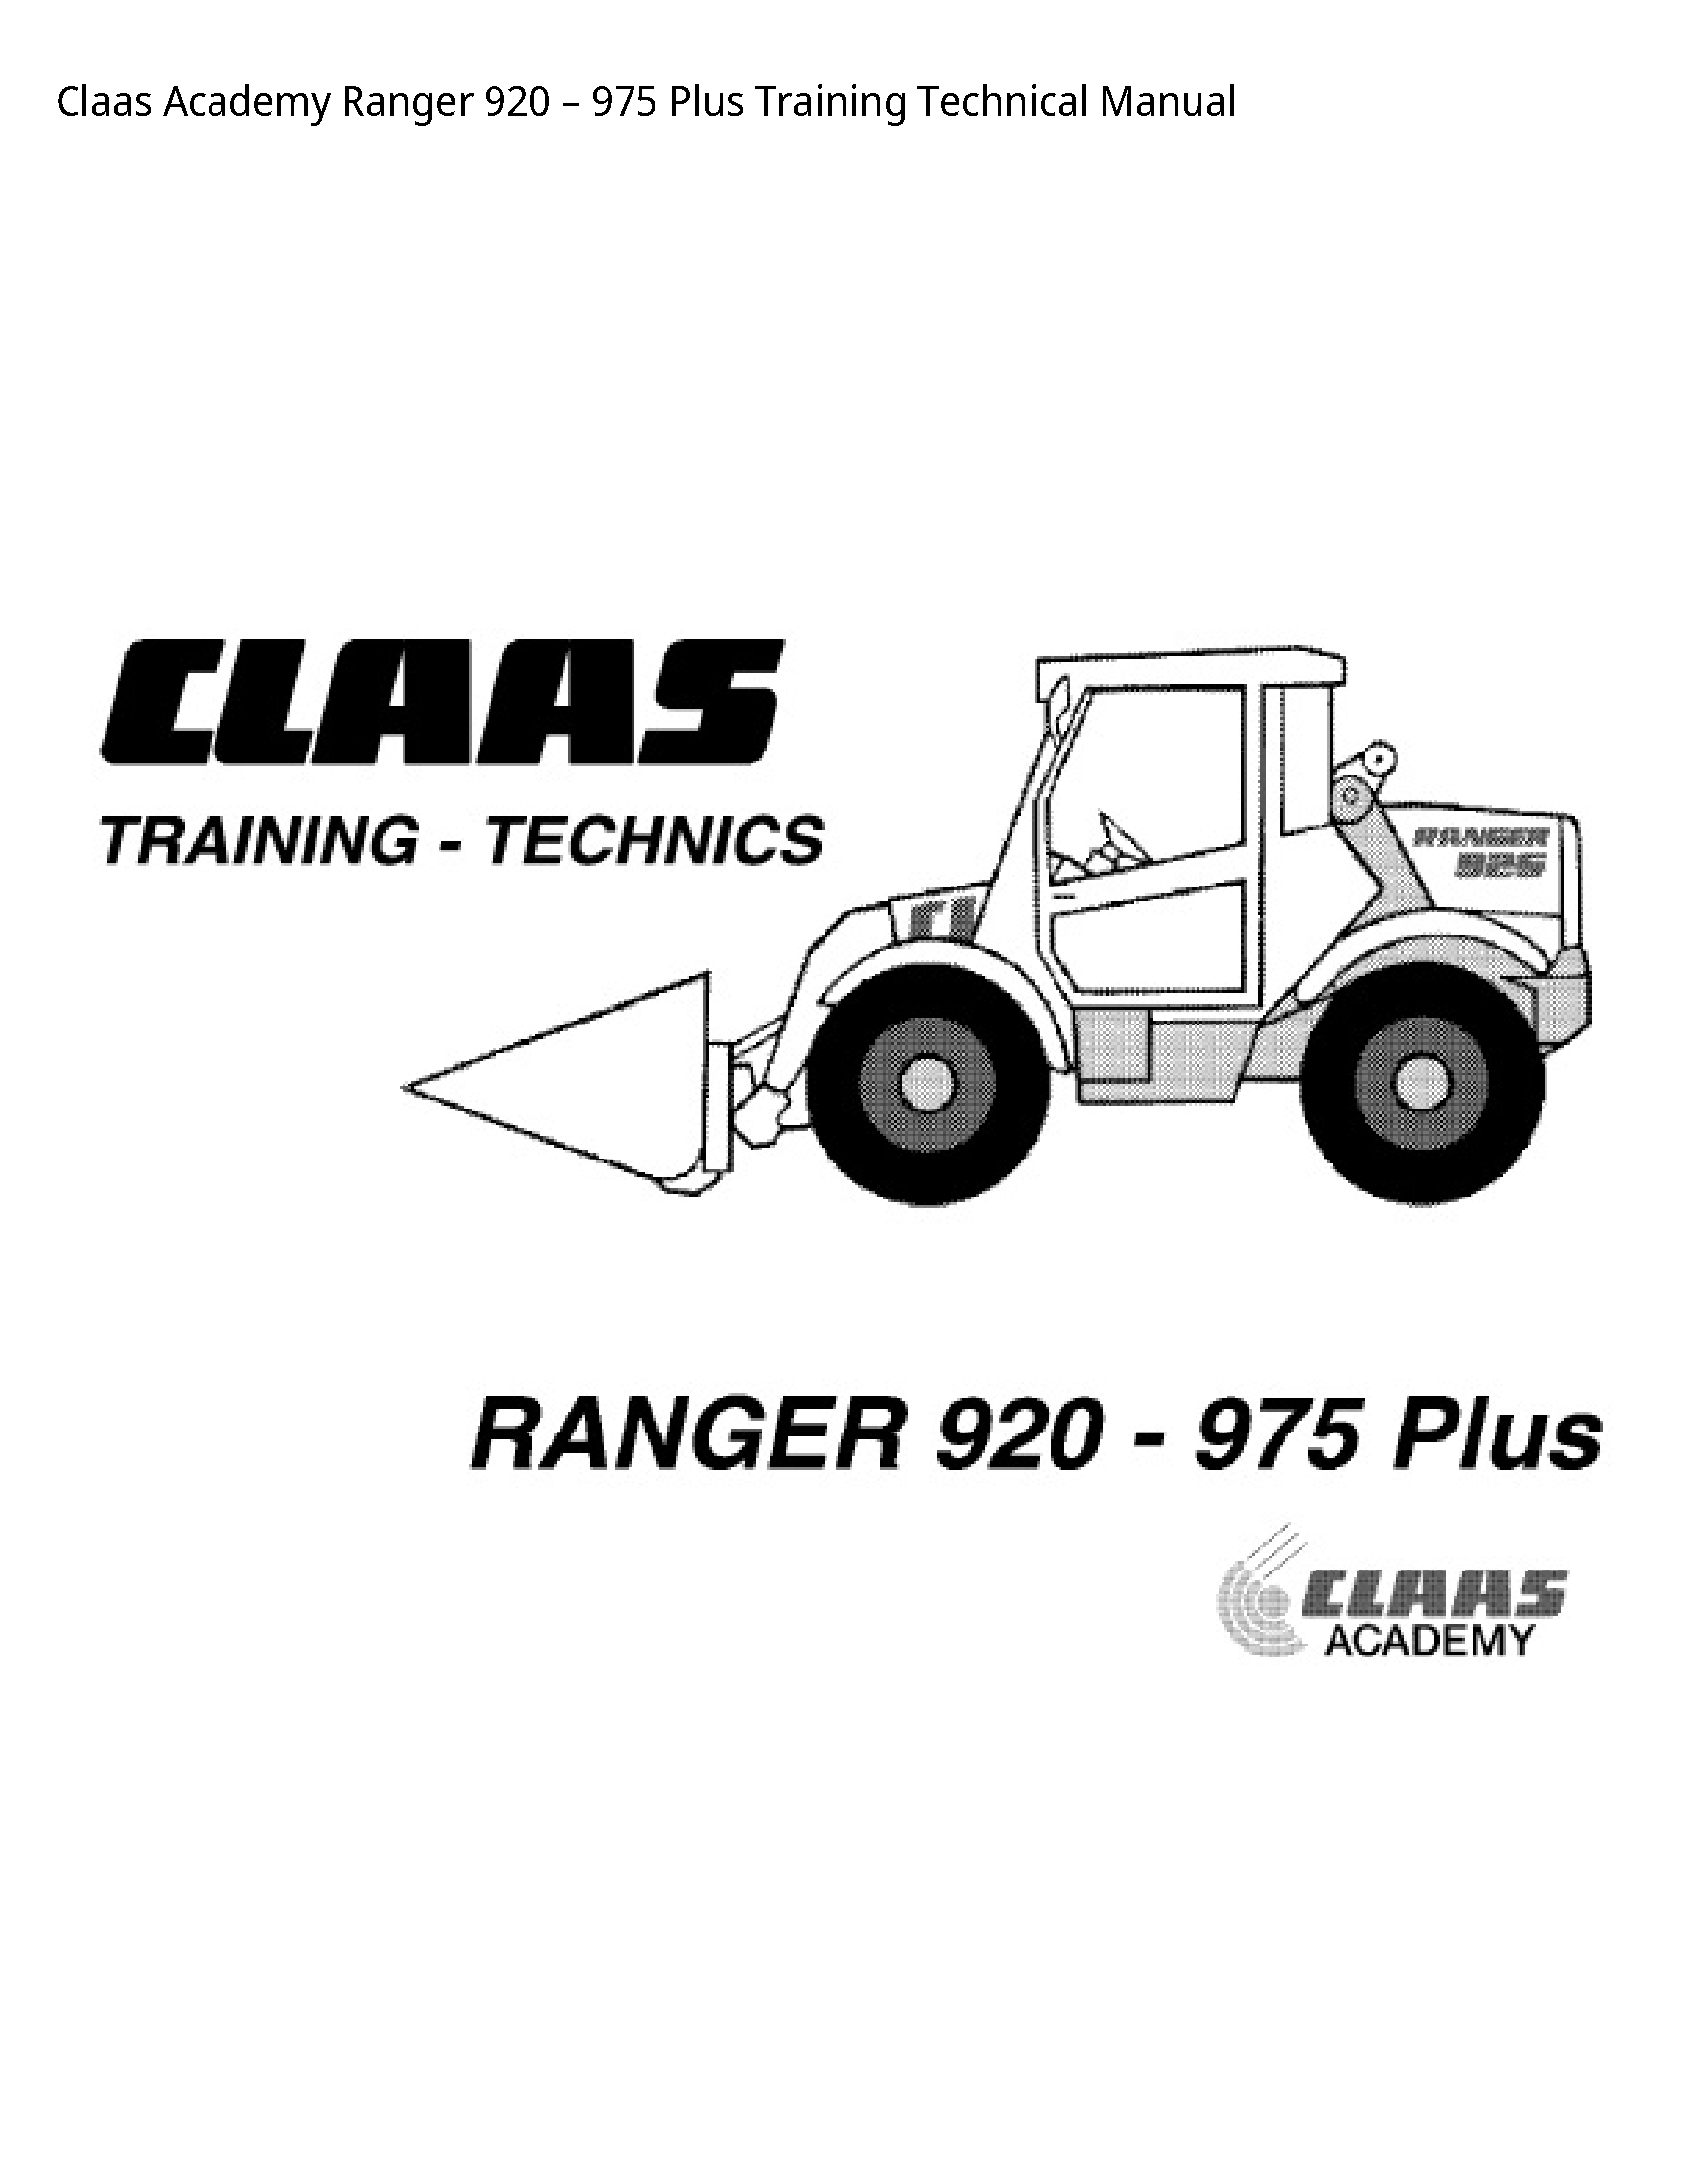 Claas 920 Academy Ranger Plus Training Technical manual